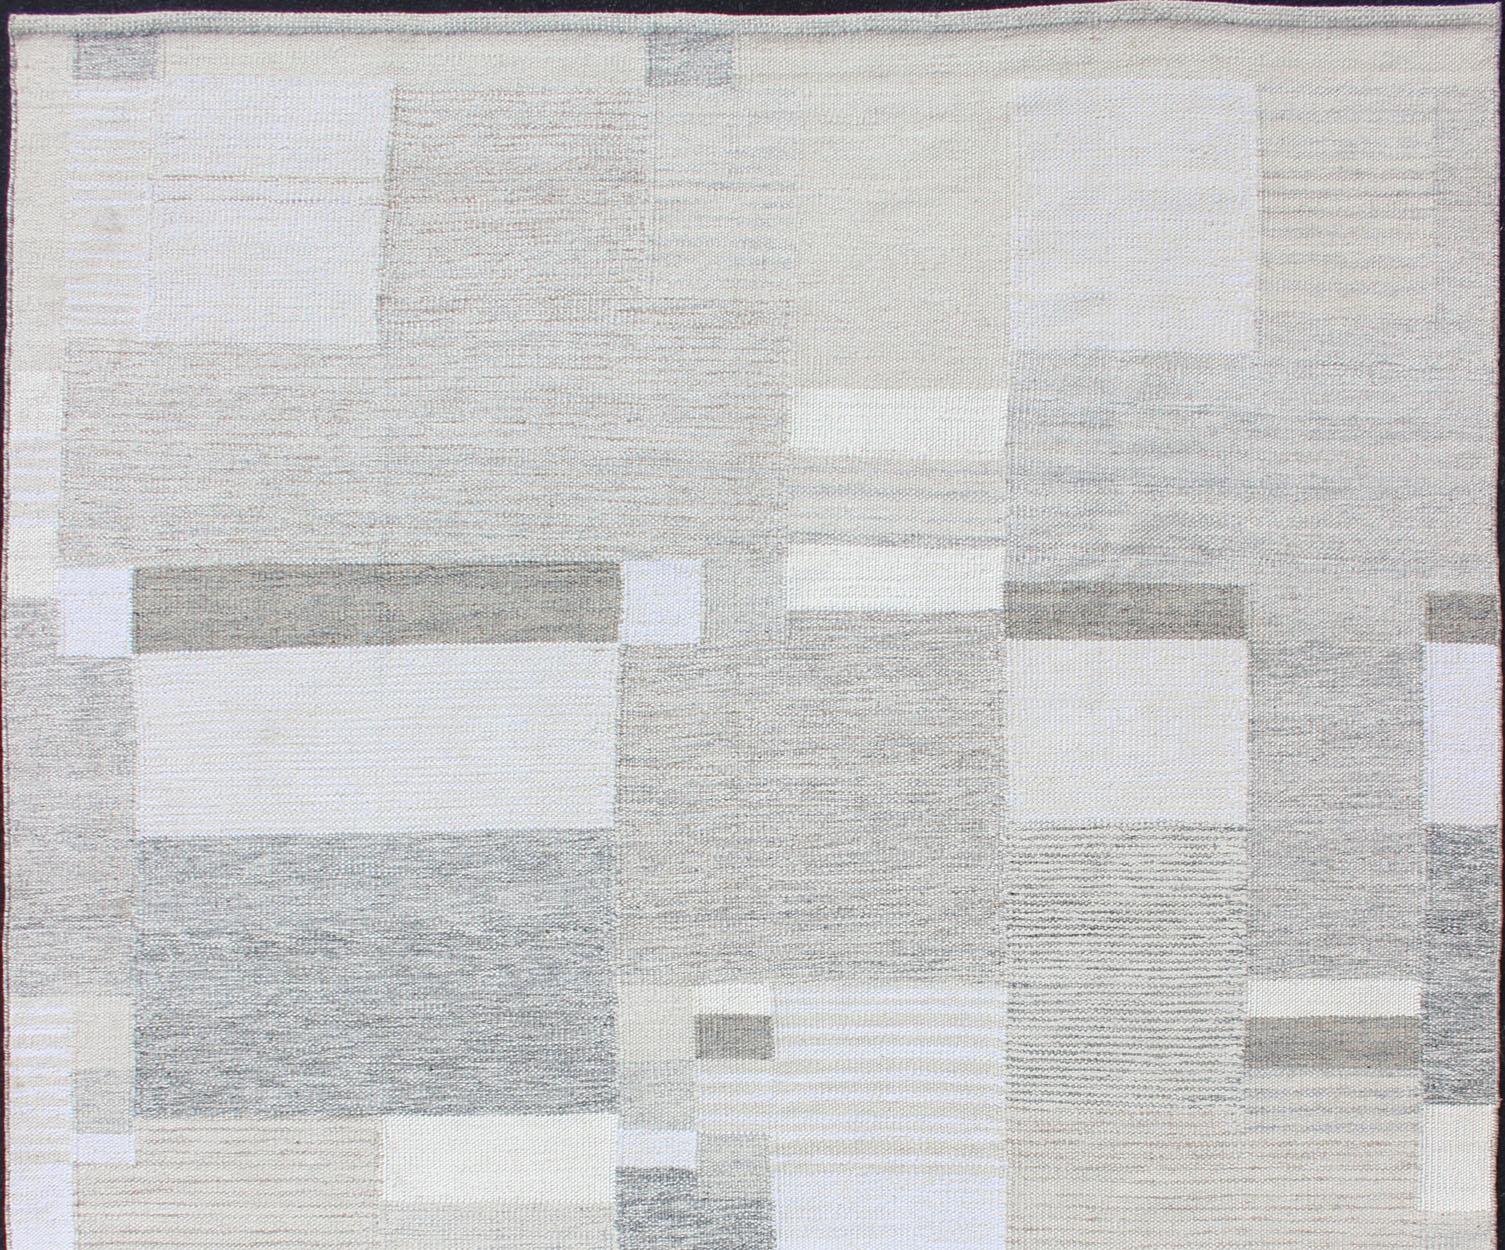 Gray, beige, light brown, white and cream modern design Scandinavian style flat-weave rug, rug rjk-20011-shb-004-02, country of origin / type: India / Scandinavian flat-weave.

This Scandinavian flat-weave style is inspired by the work of Swedish